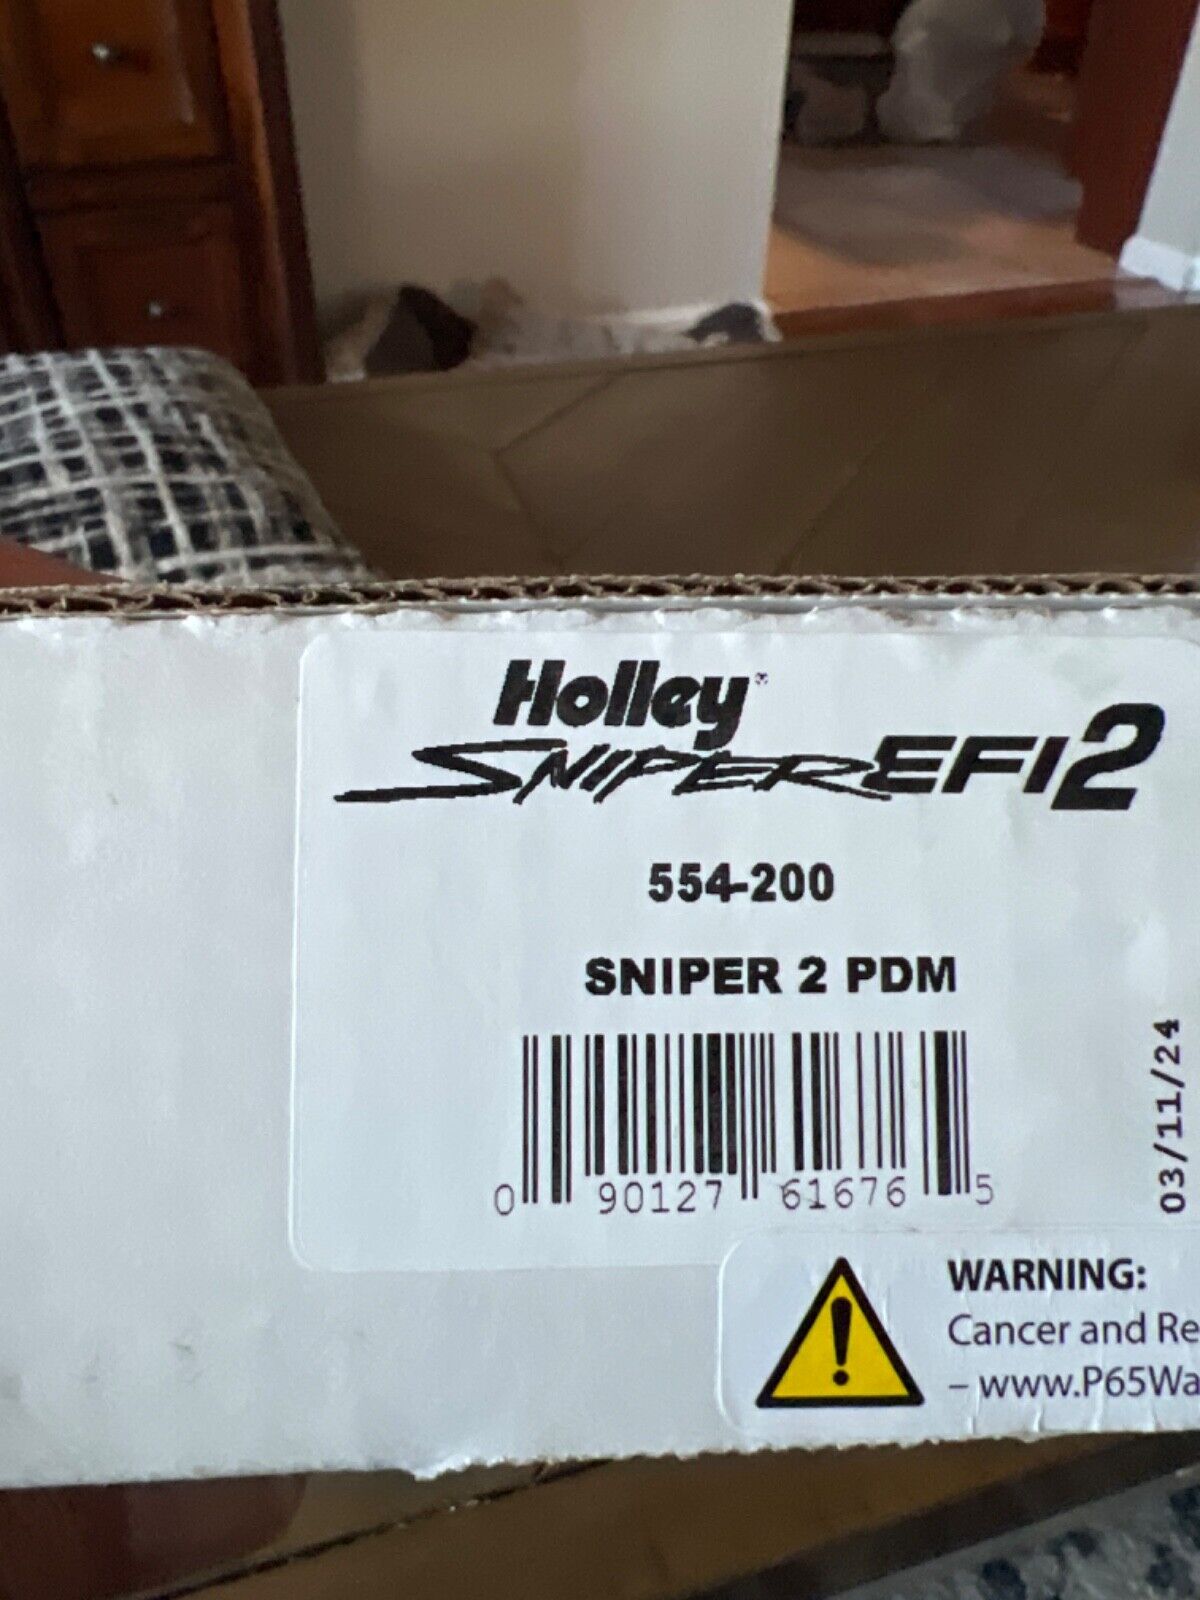 holley sniper efi2 554-200